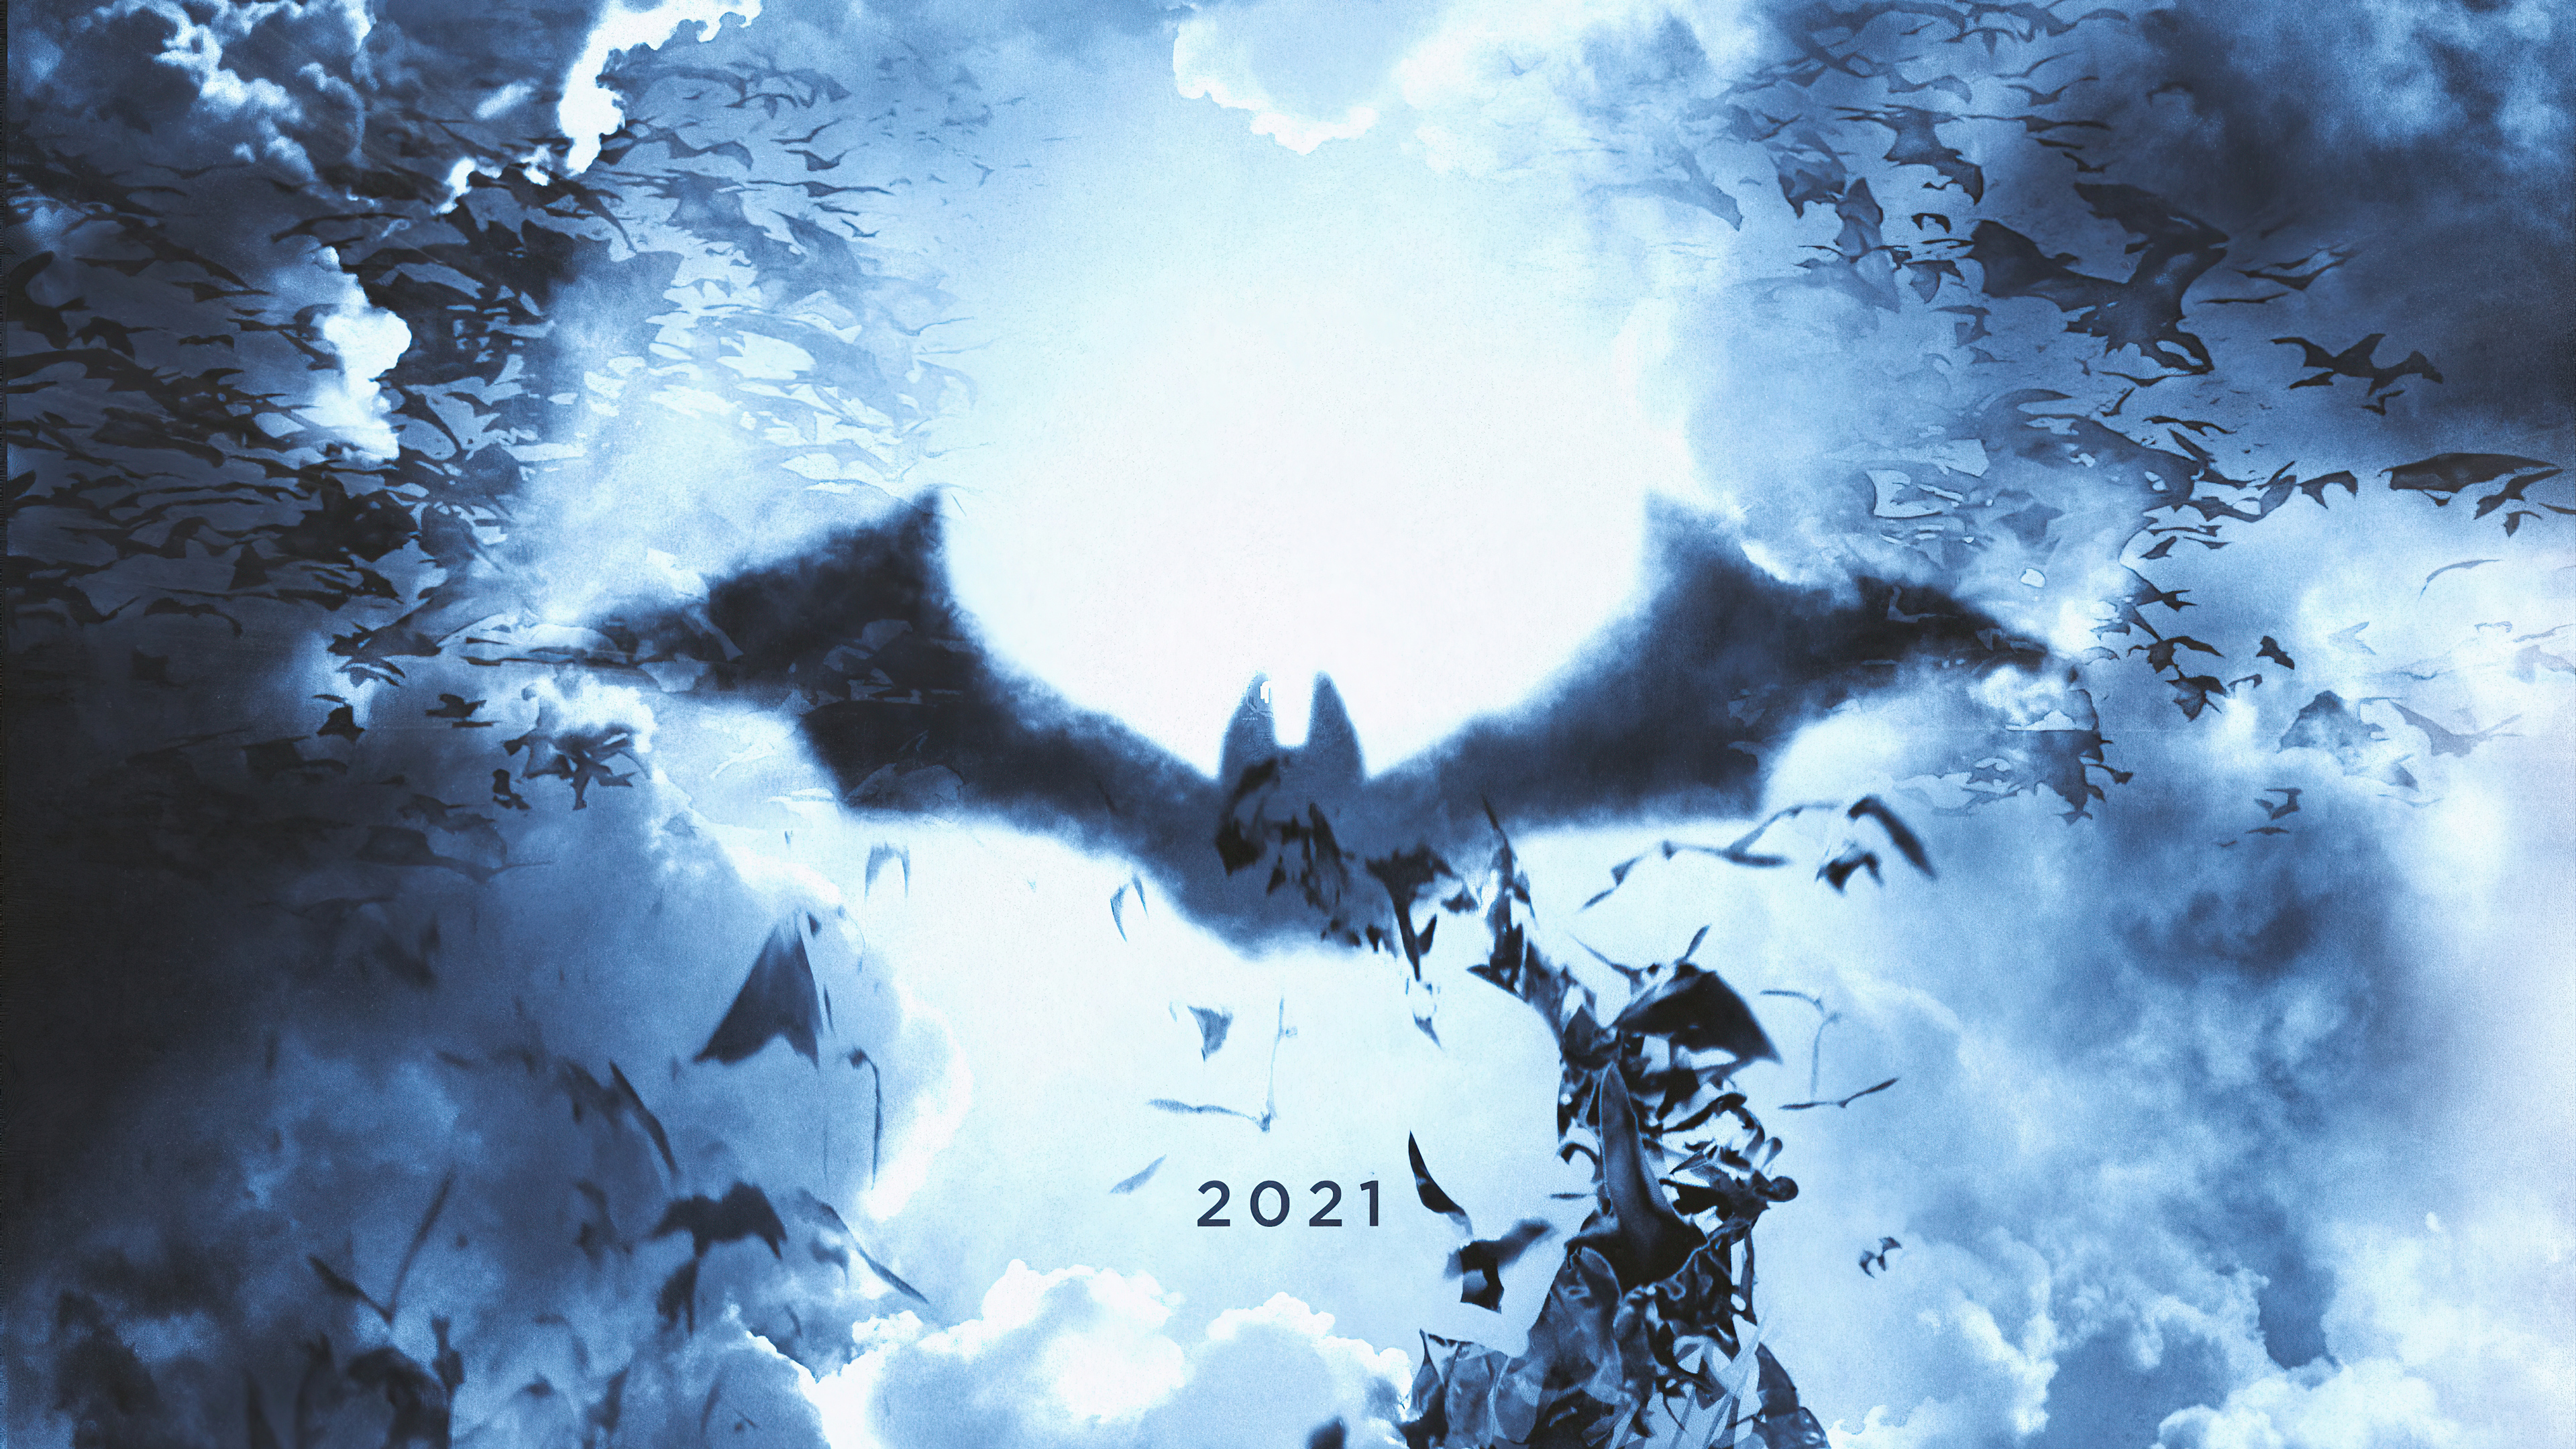 New Batman 2021 Digital Art Wallpapers